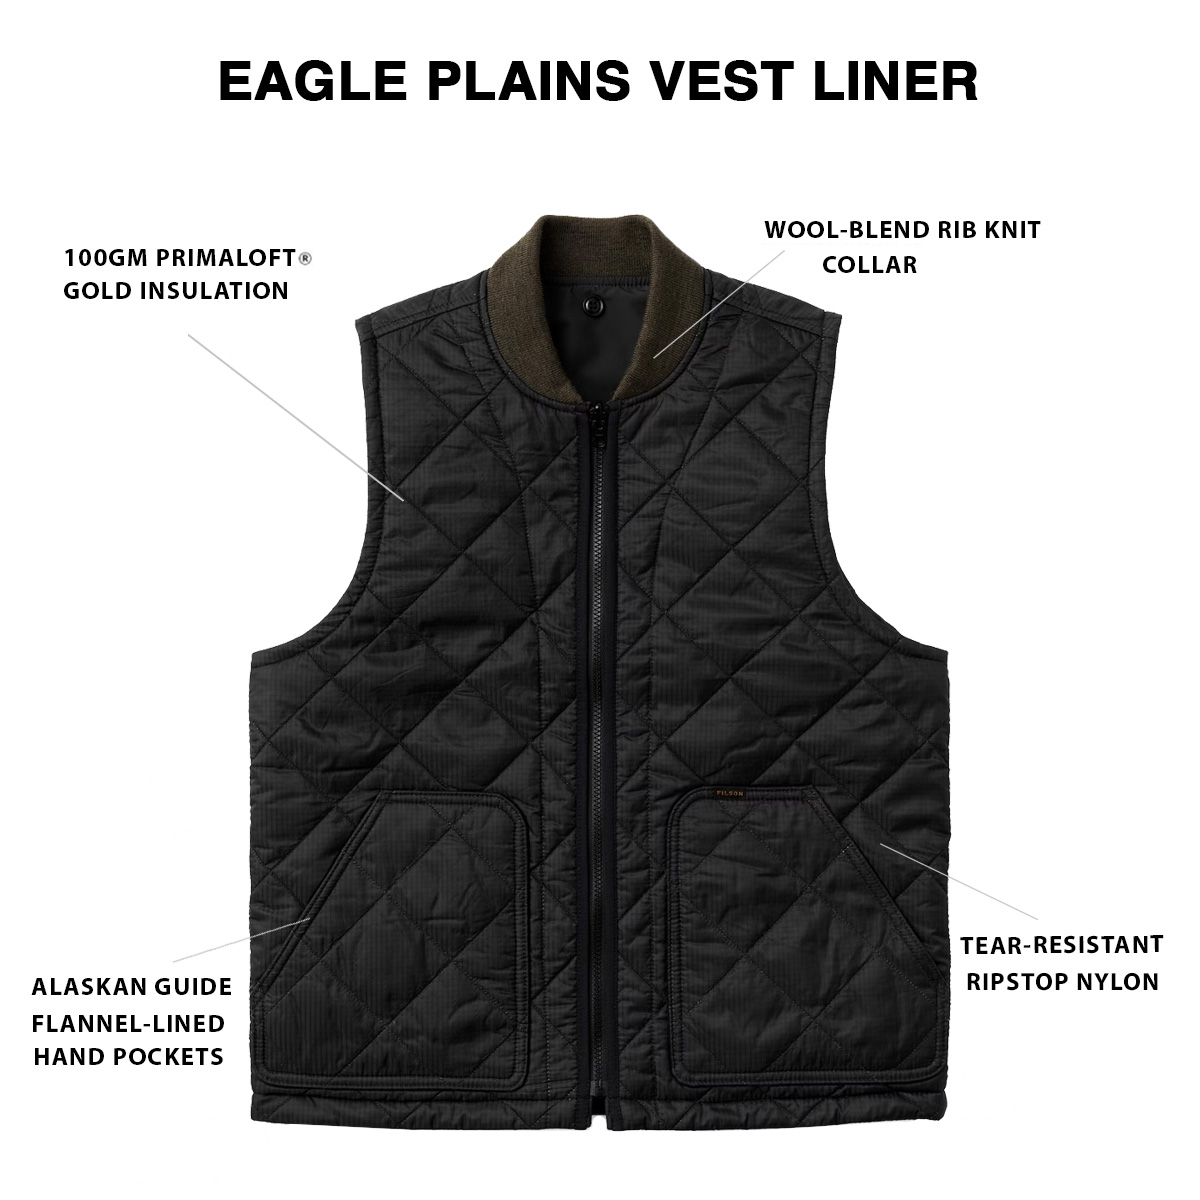 Filson Eagle Plains Vest Liner Charcoal/Black, with Cordura® Ripstop nylon and 100gm PrimaLoft® Gold insulation